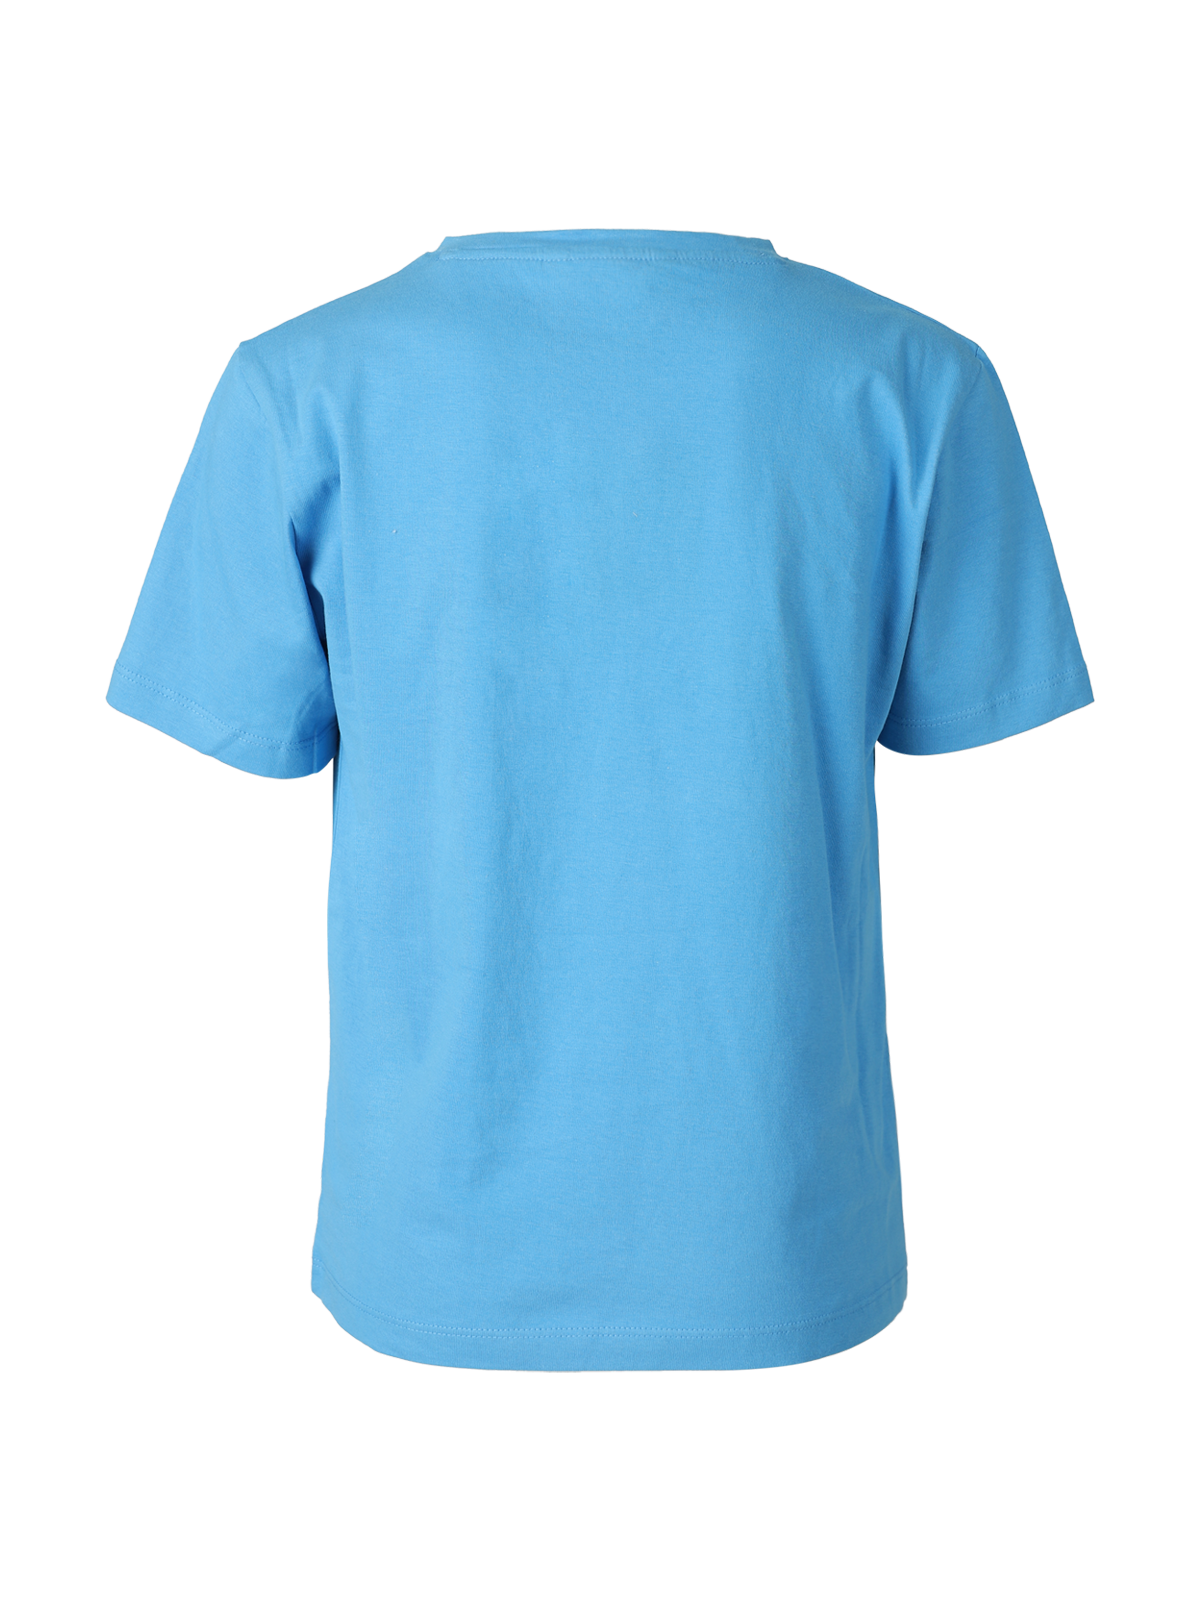 Vievy Girls T-Shirt | Blue